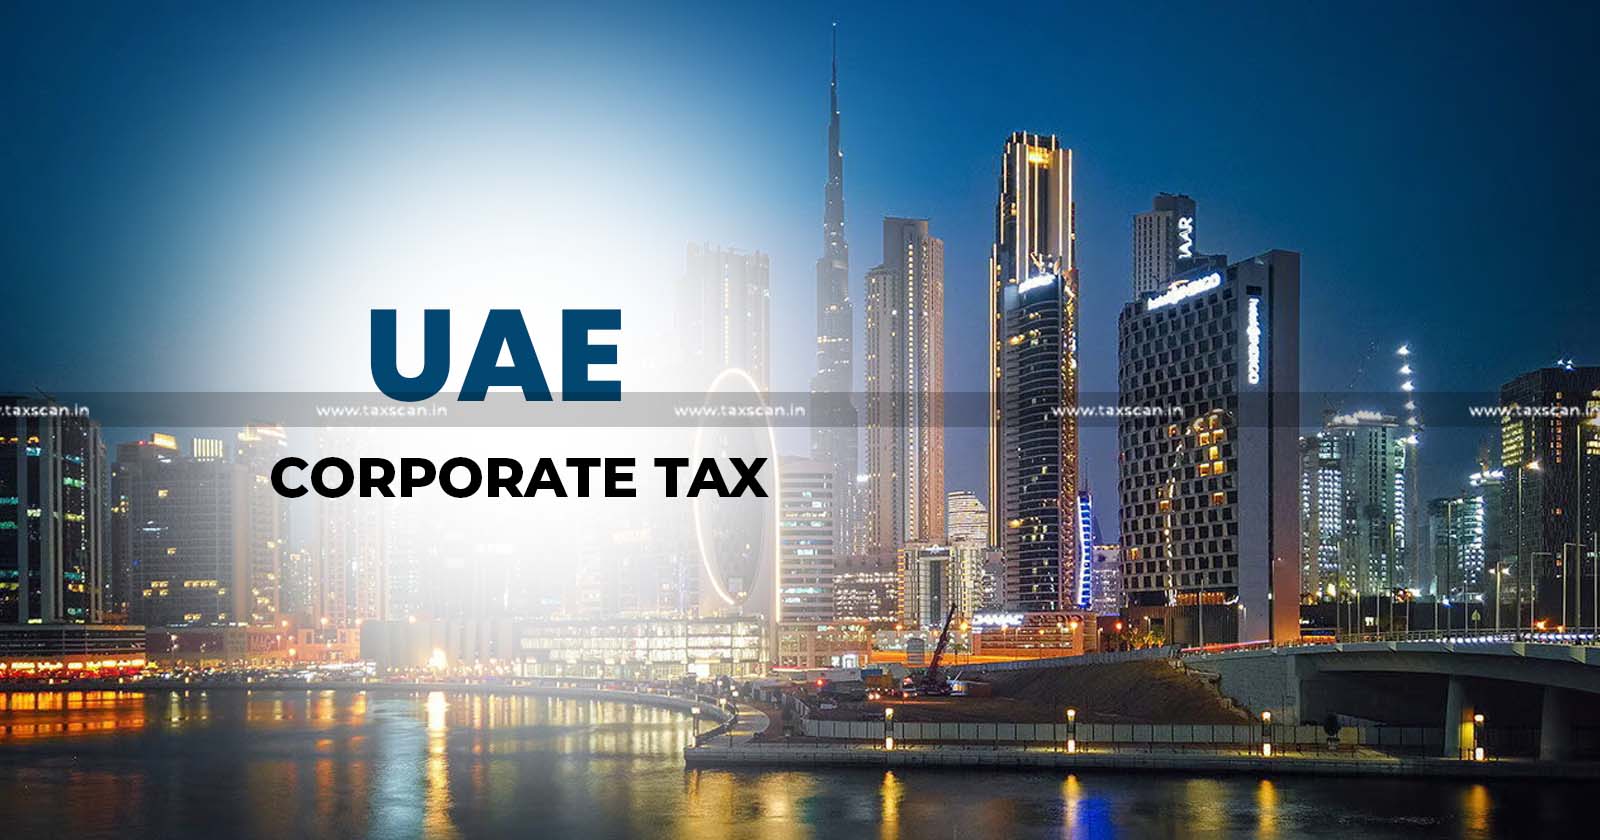 ICSI - UAE Corporate Tax - Corporate Tax - Tax Conference - UAE Corporate Tax Conference - UAE Corporate Tax Conference today at Dubai - Tax Conference today at Dubai - taxscan